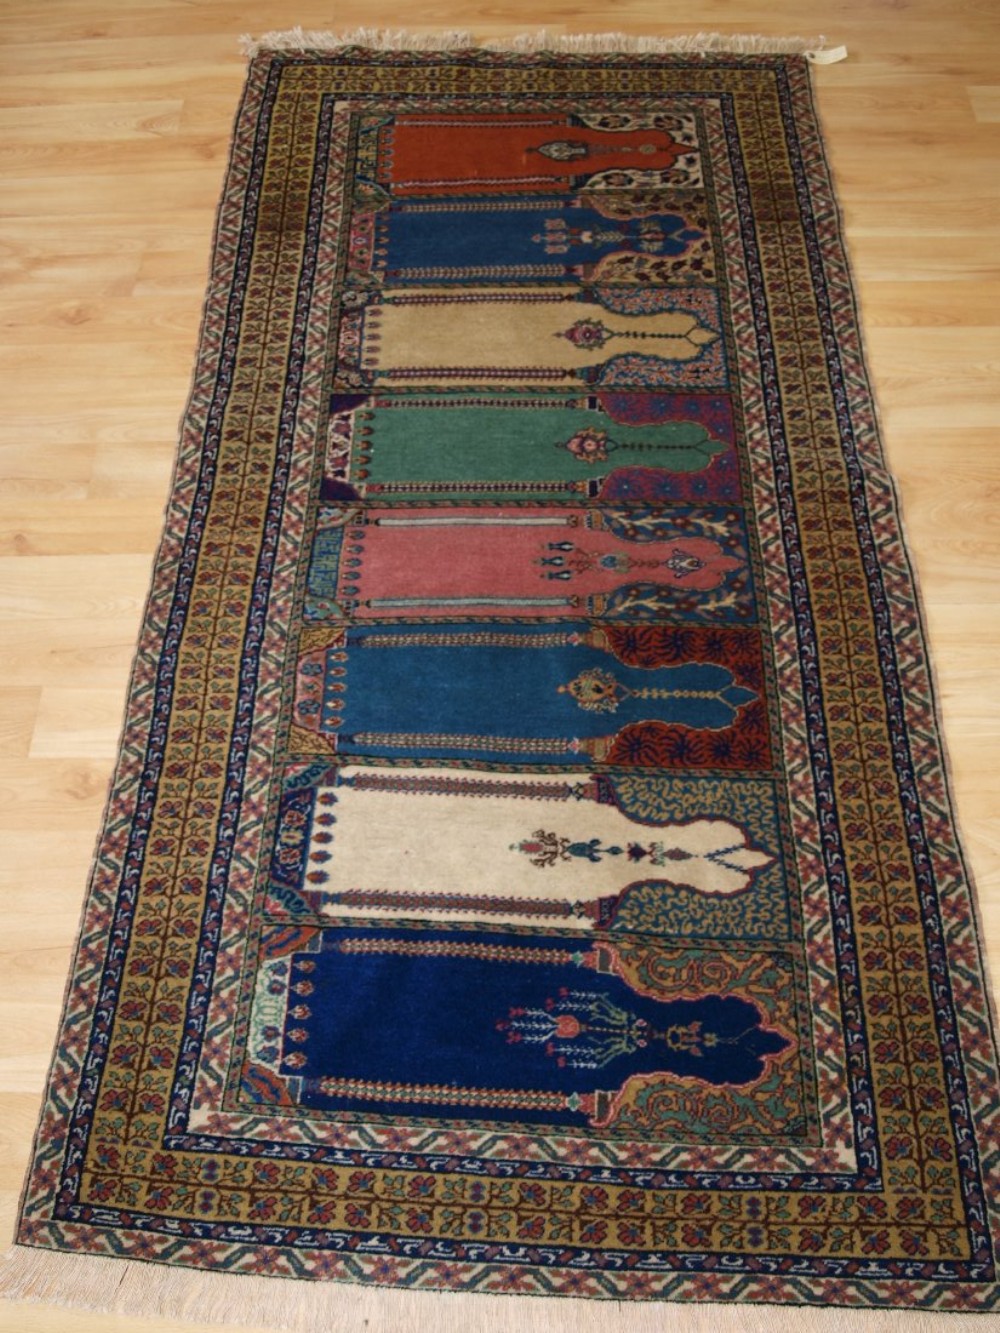 old turkish kayseri prayer rug in saf design circa 192030